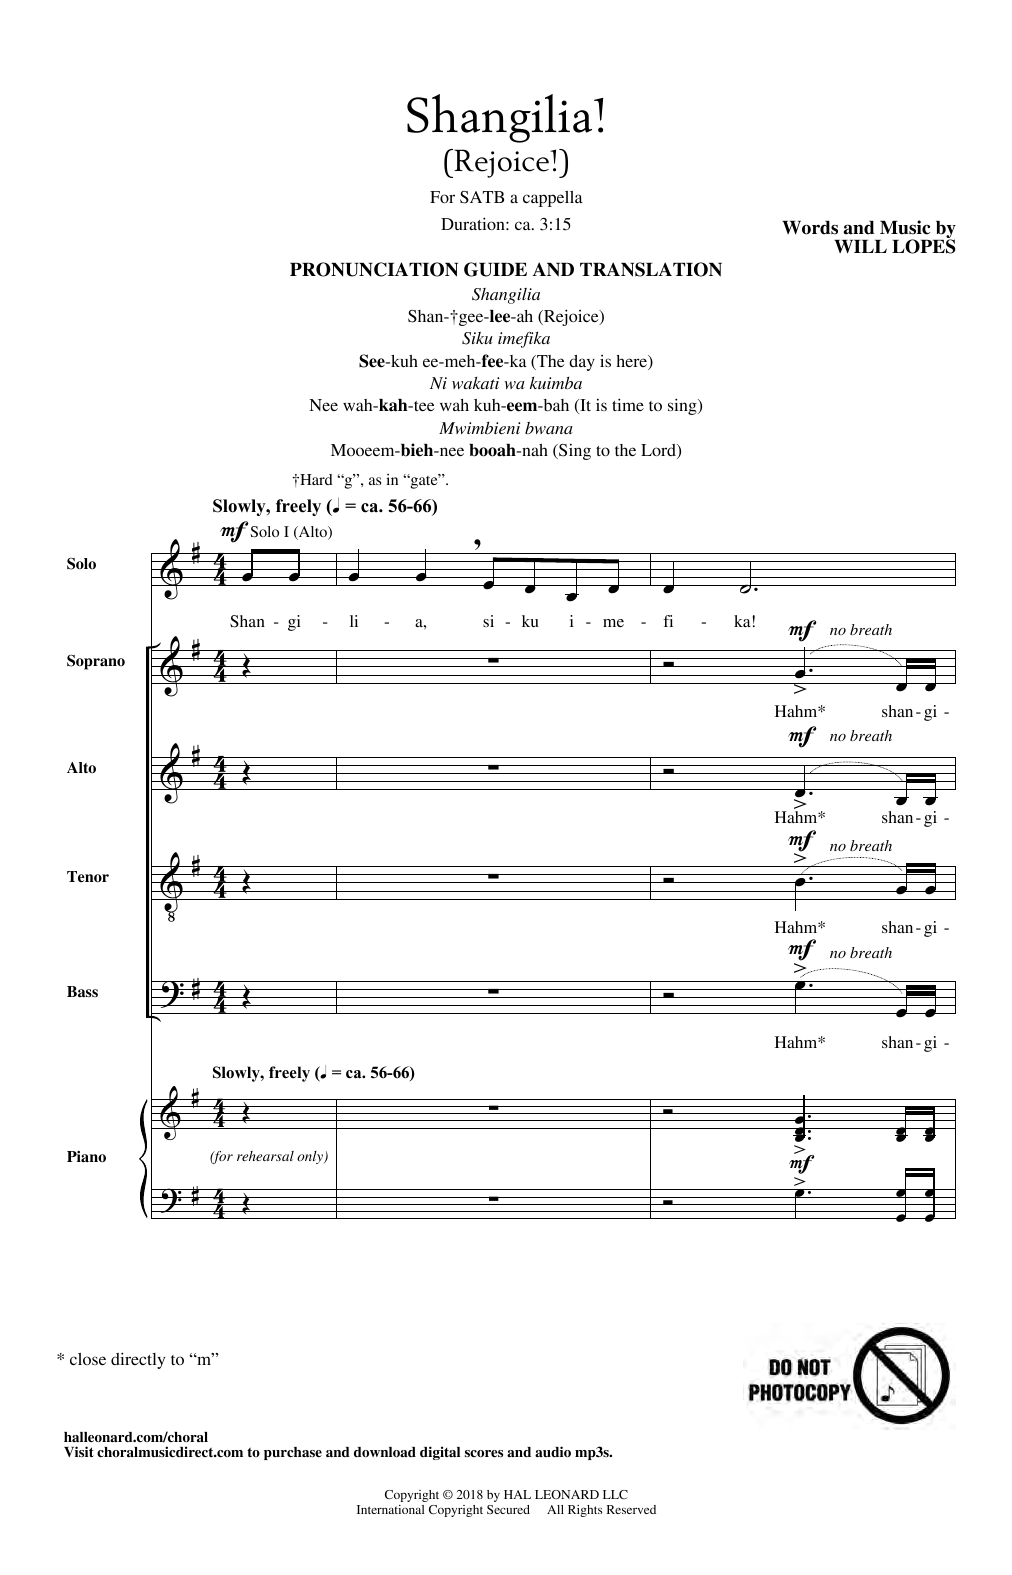 Will Lopes Shangilia! Sheet Music Notes & Chords for SATB Choir - Download or Print PDF